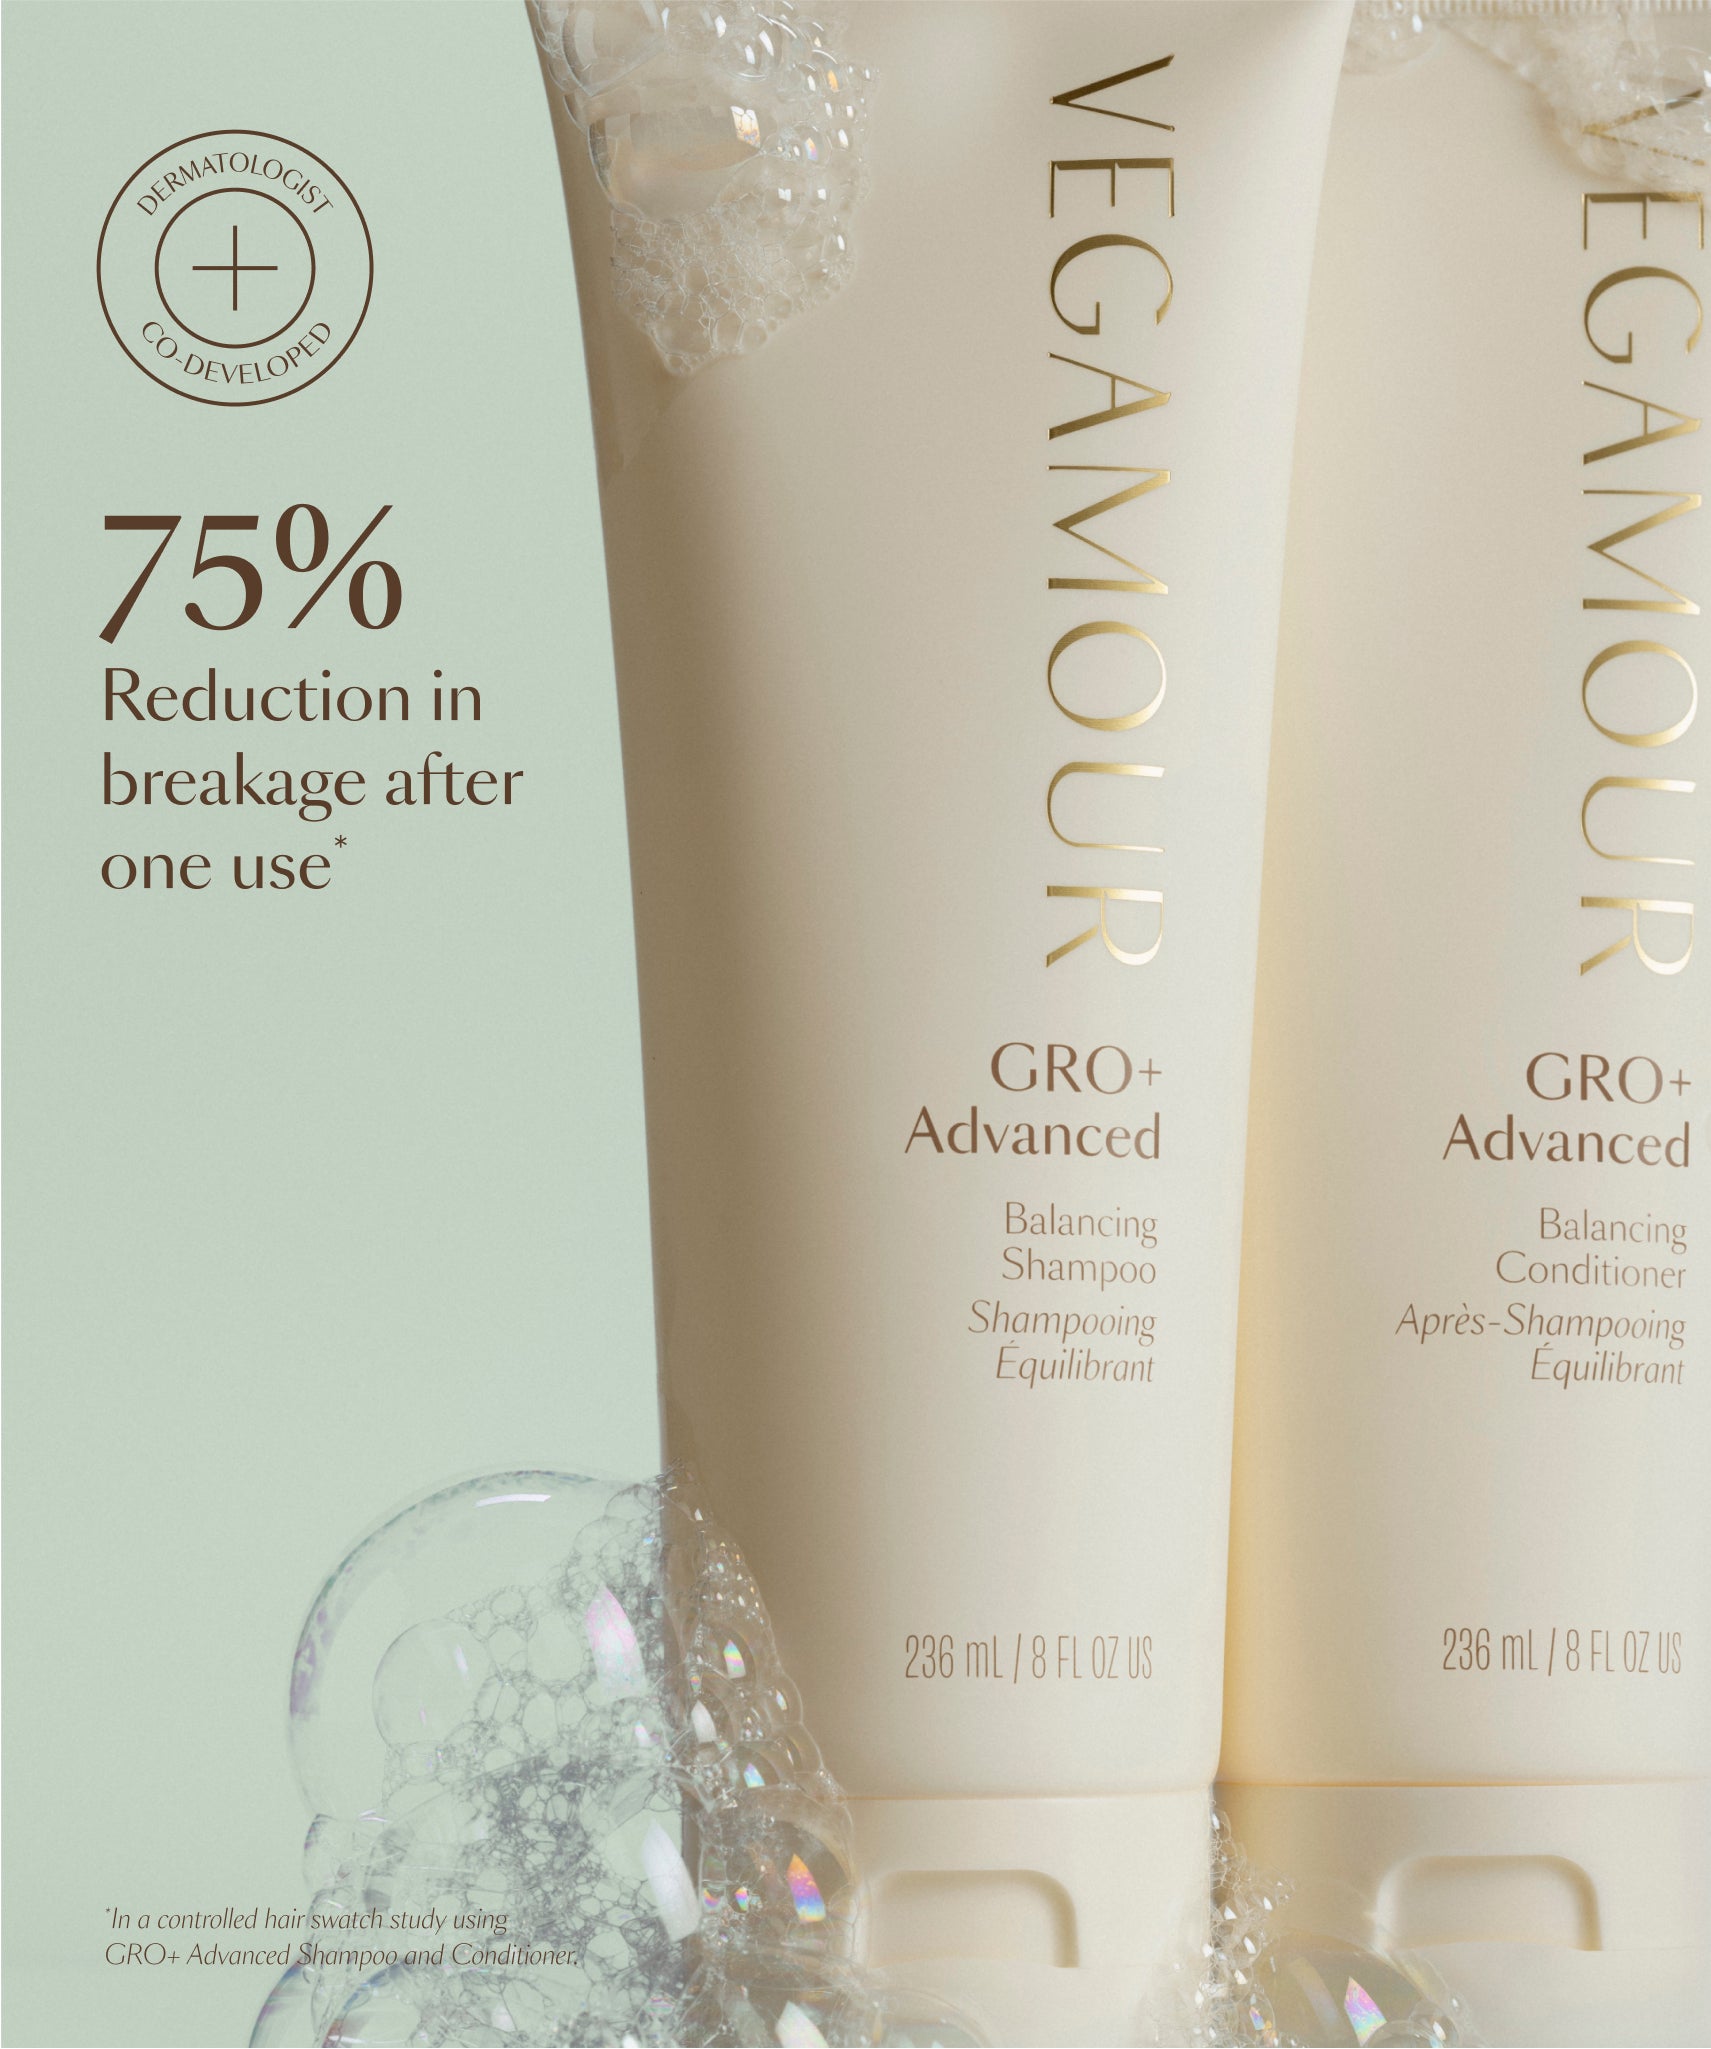 GRO+ Advanced Balancing Shampoo and Conditioner Kit